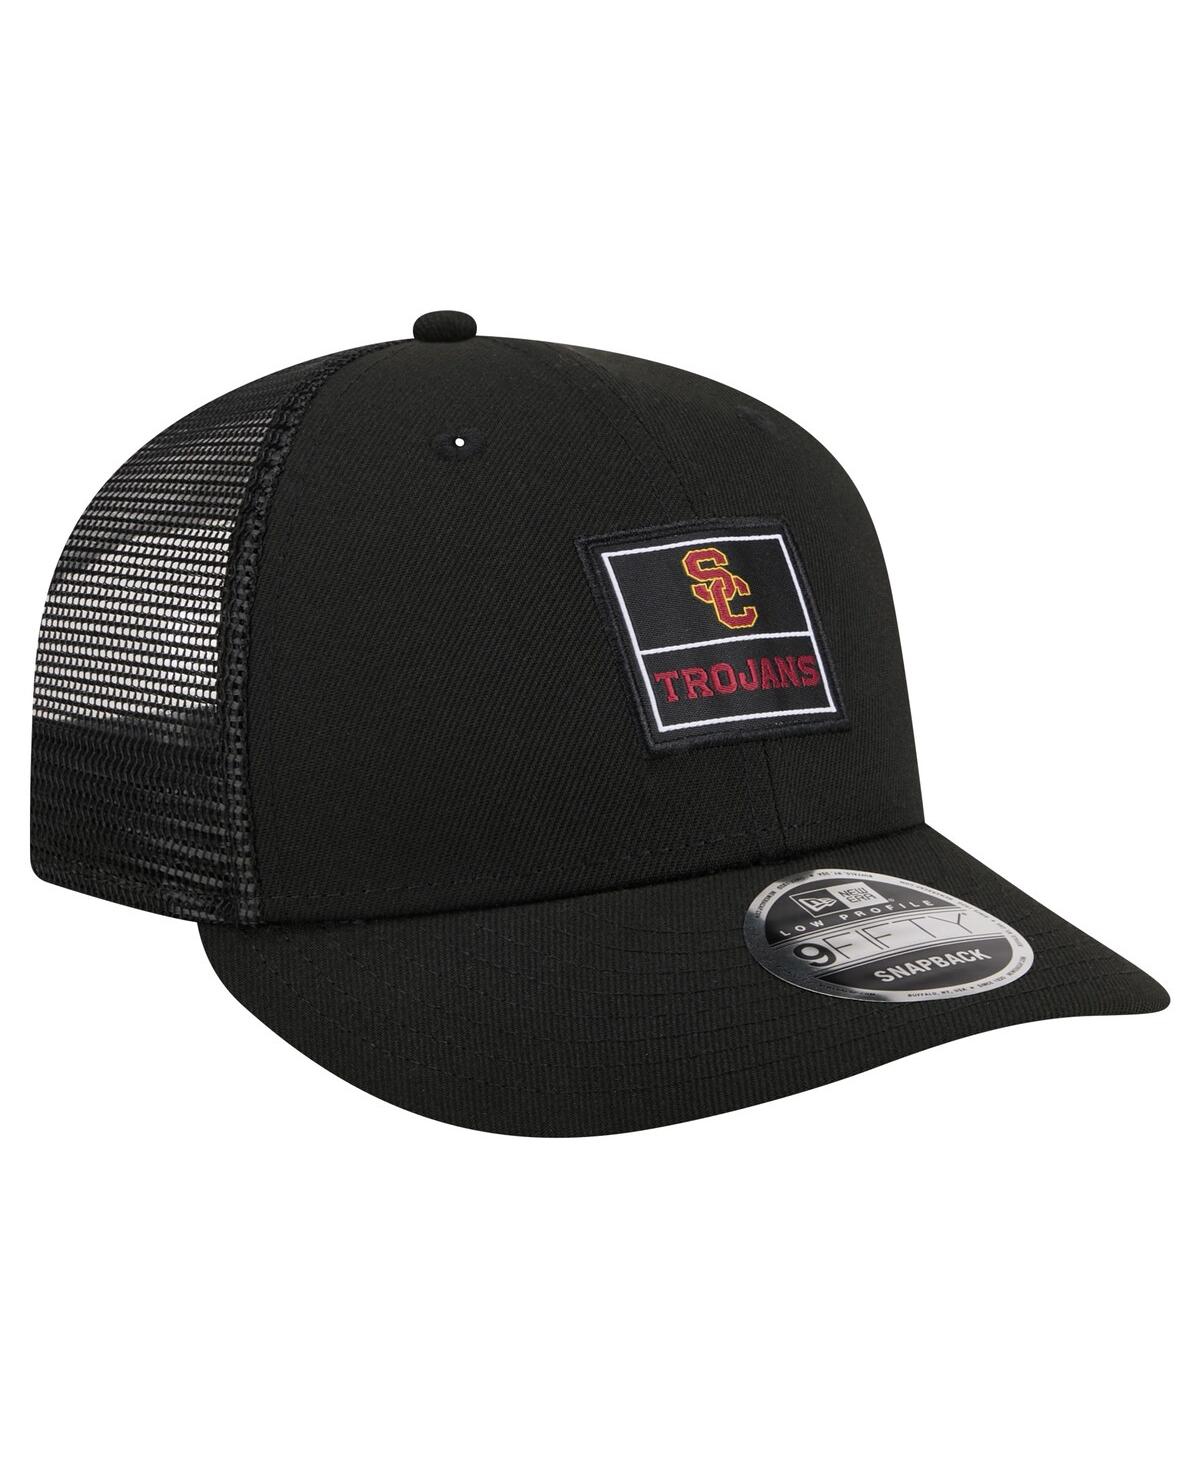 Shop New Era Men's Black Usc Trojans Labeled 9fifty Snapback Hat